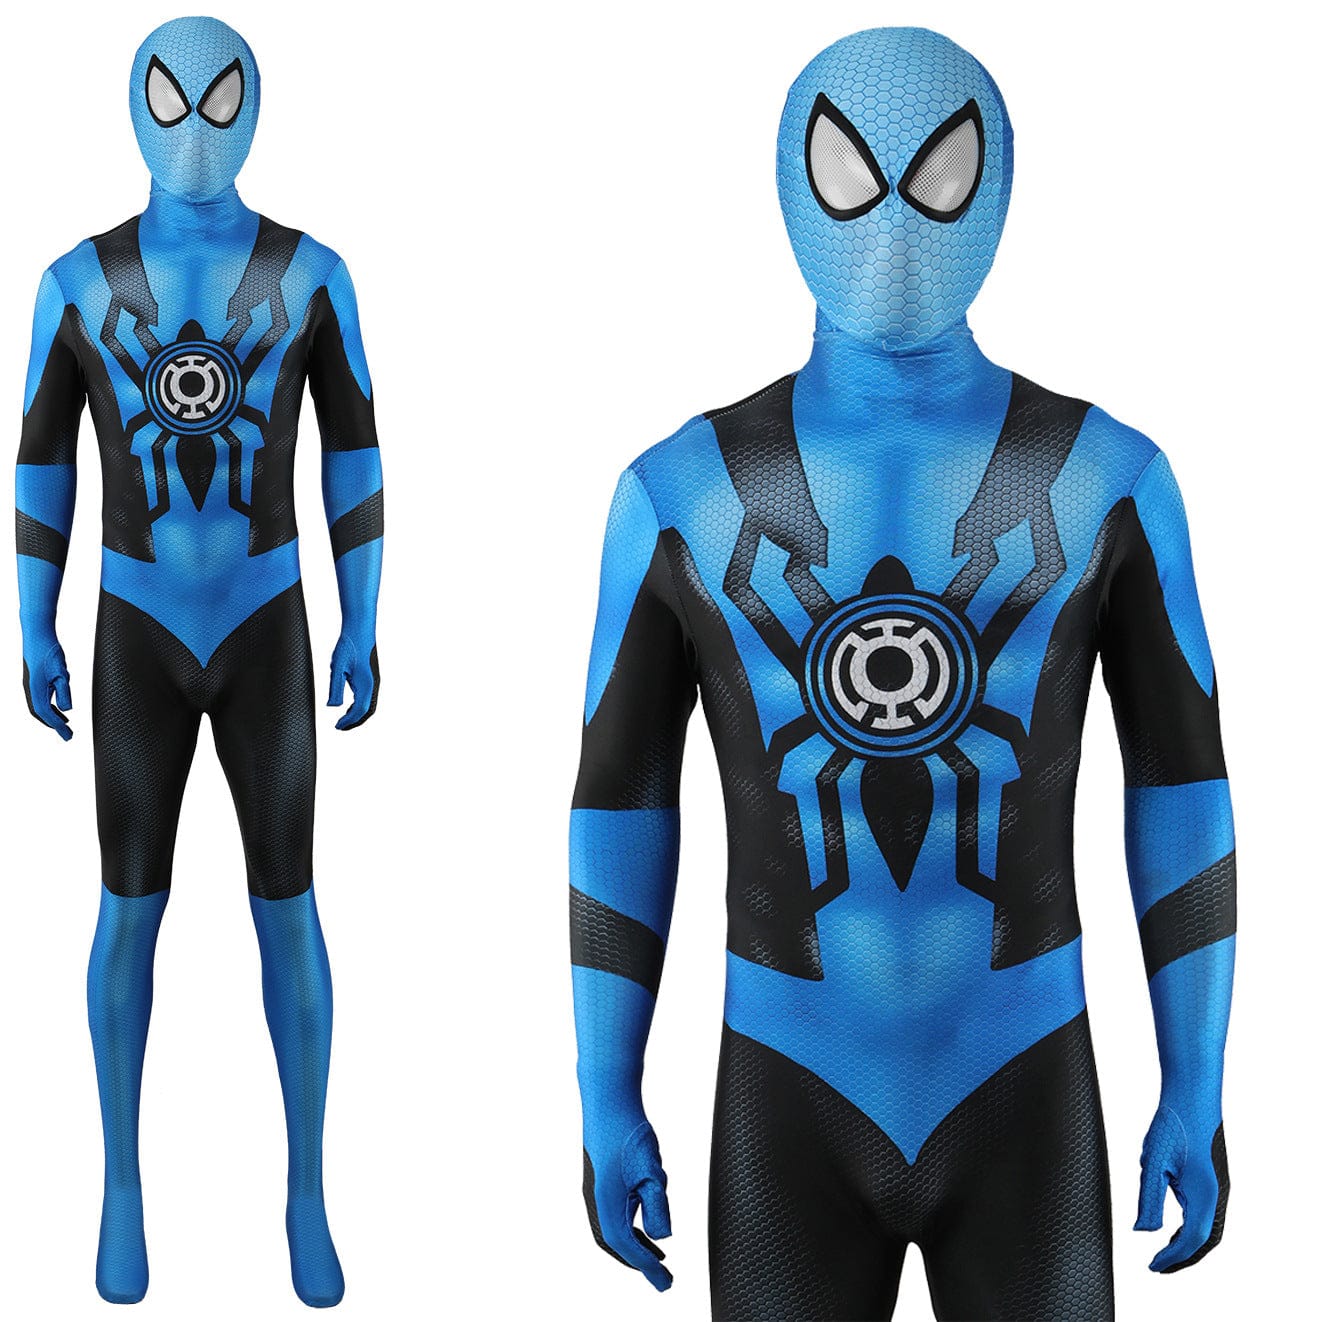 The Blue Lantern Spider-man Jumpsuits Cosplay Costume Adult Bodysuit